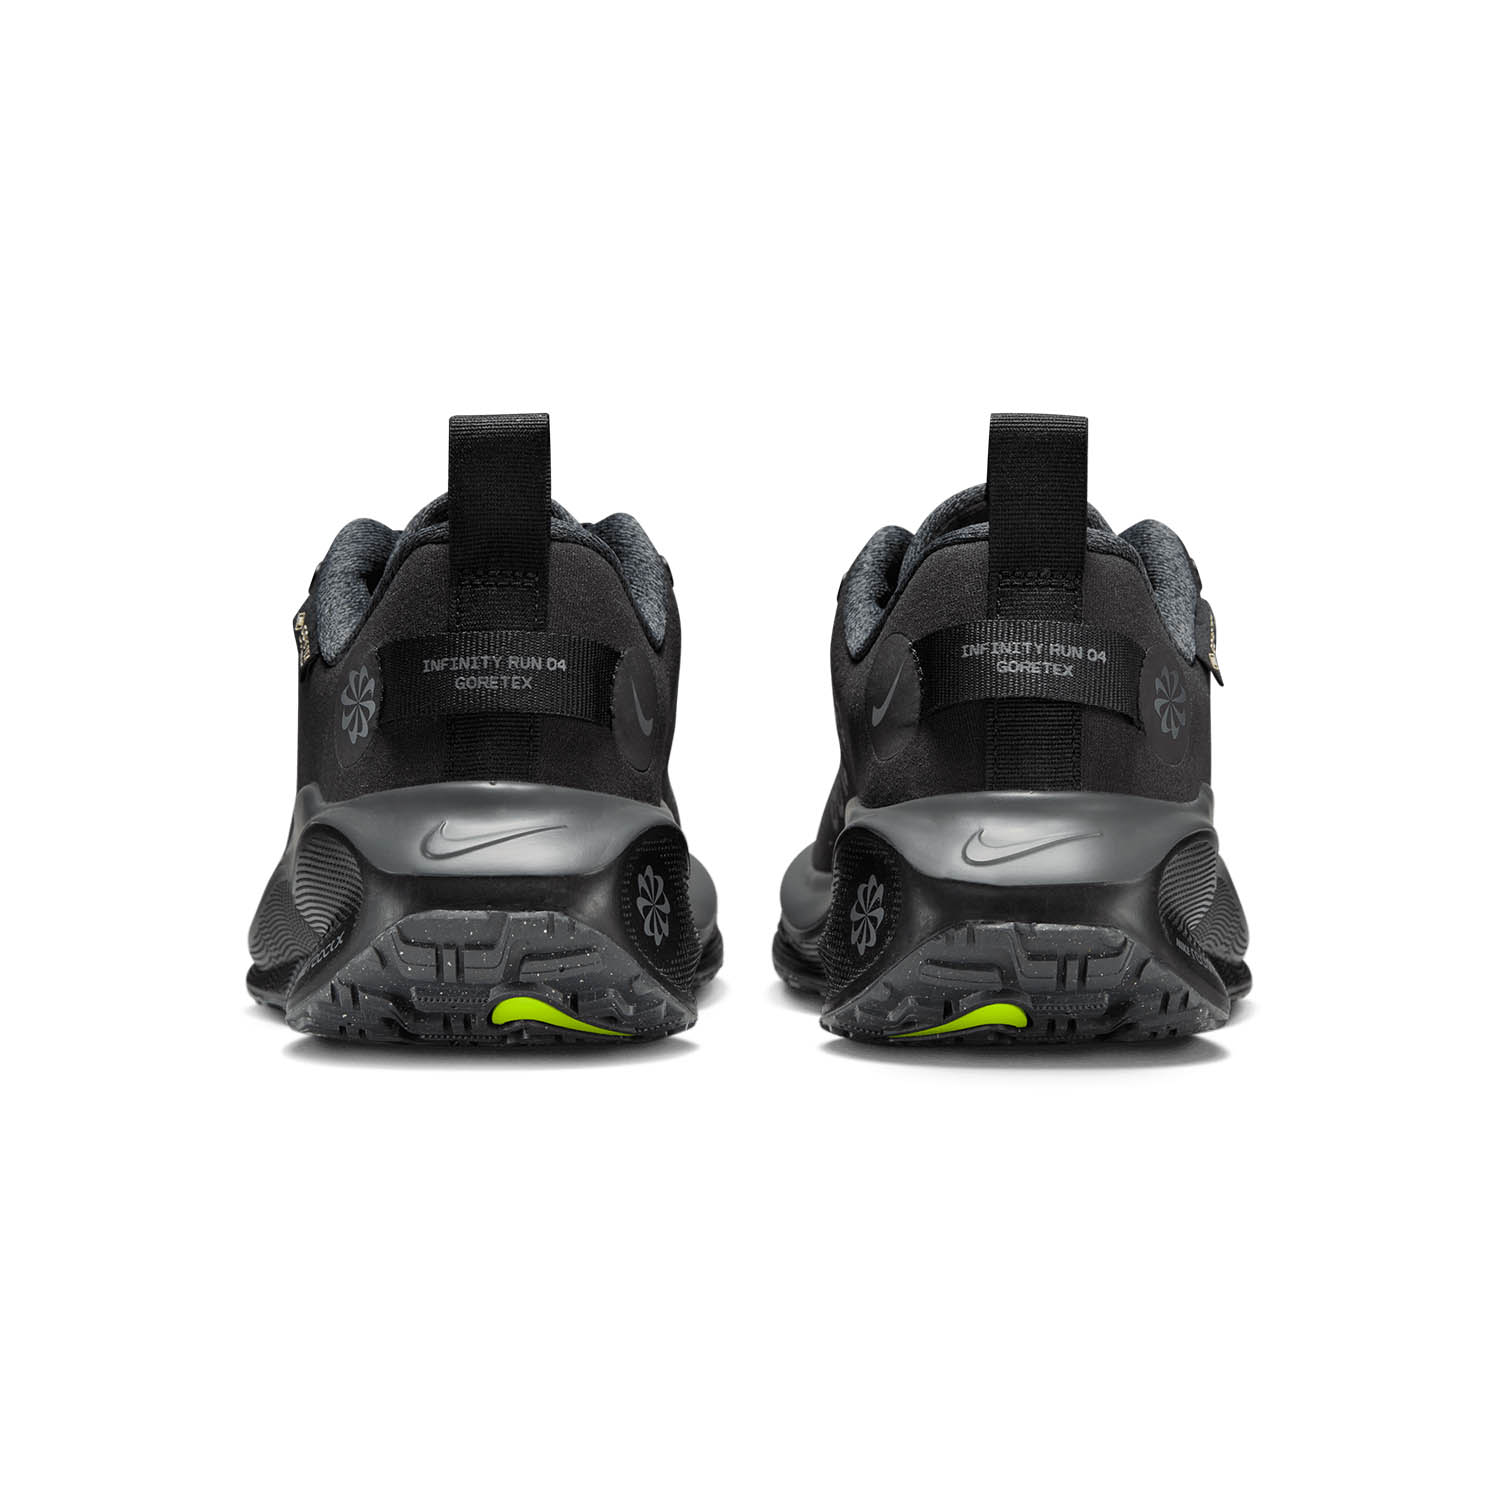 Nike InfinityRN 4 GTX - Black/Anthracite/Volt